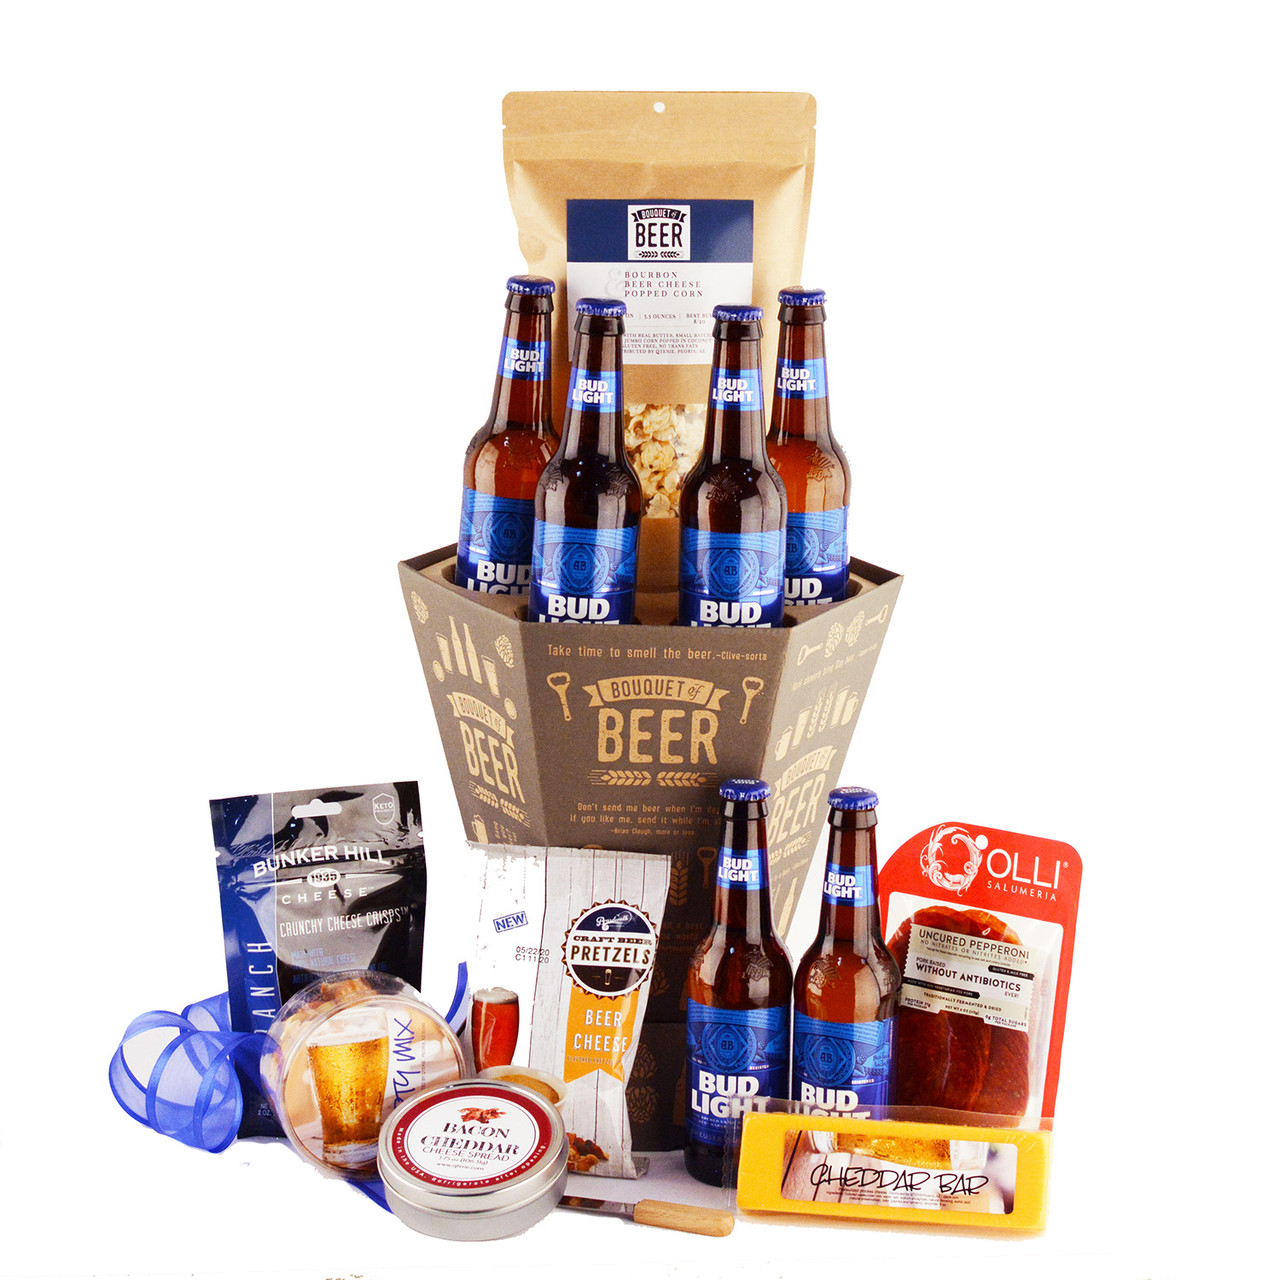 Made in Virginia Beer Gift Crate - Twana's Creation Gourmet Gift Basket